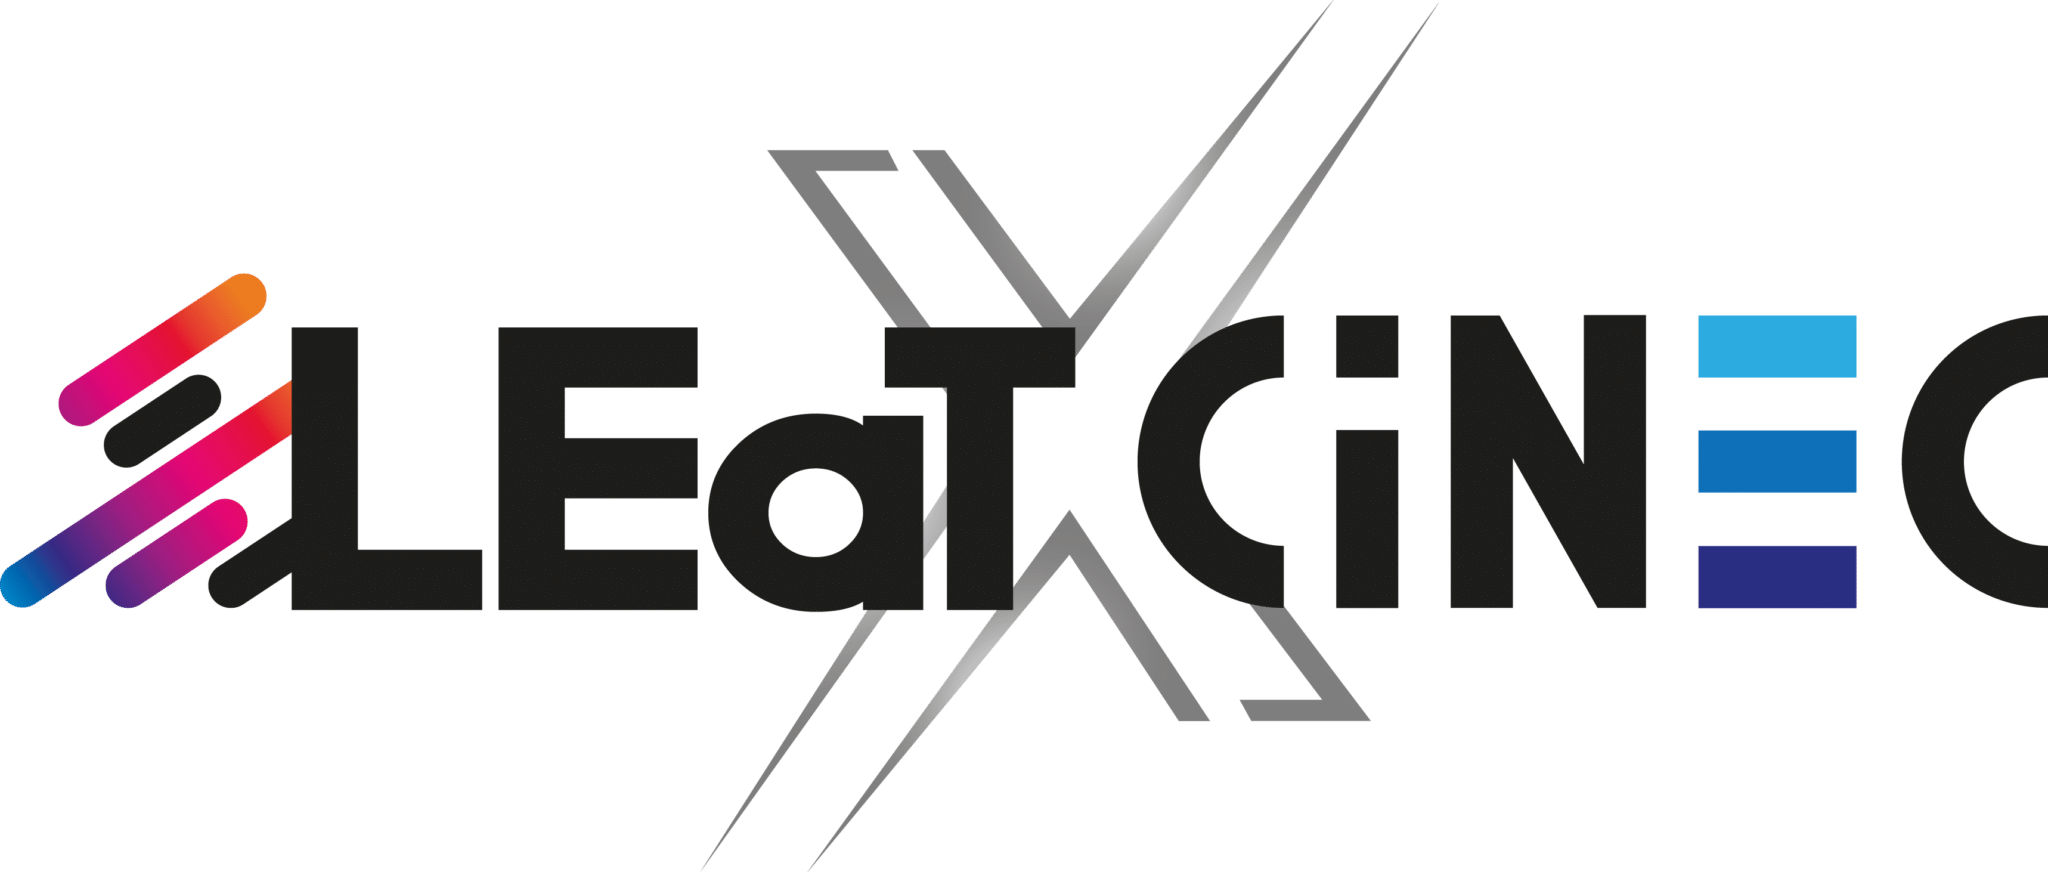 LEaT X CiNEC Logo